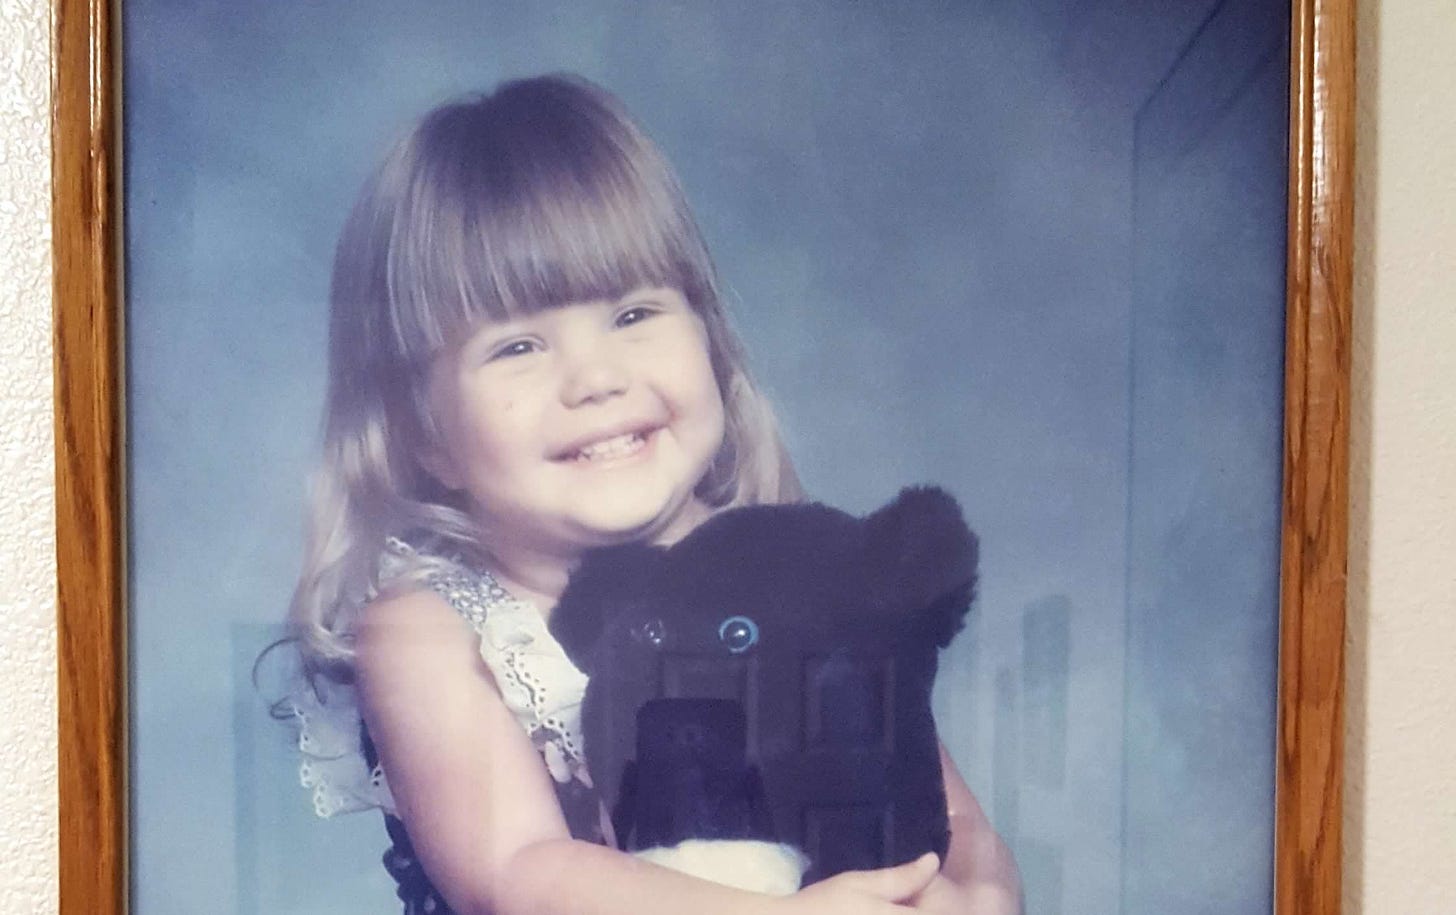 A blond three-year-old girl in a blue dress hugs a black teddy bear